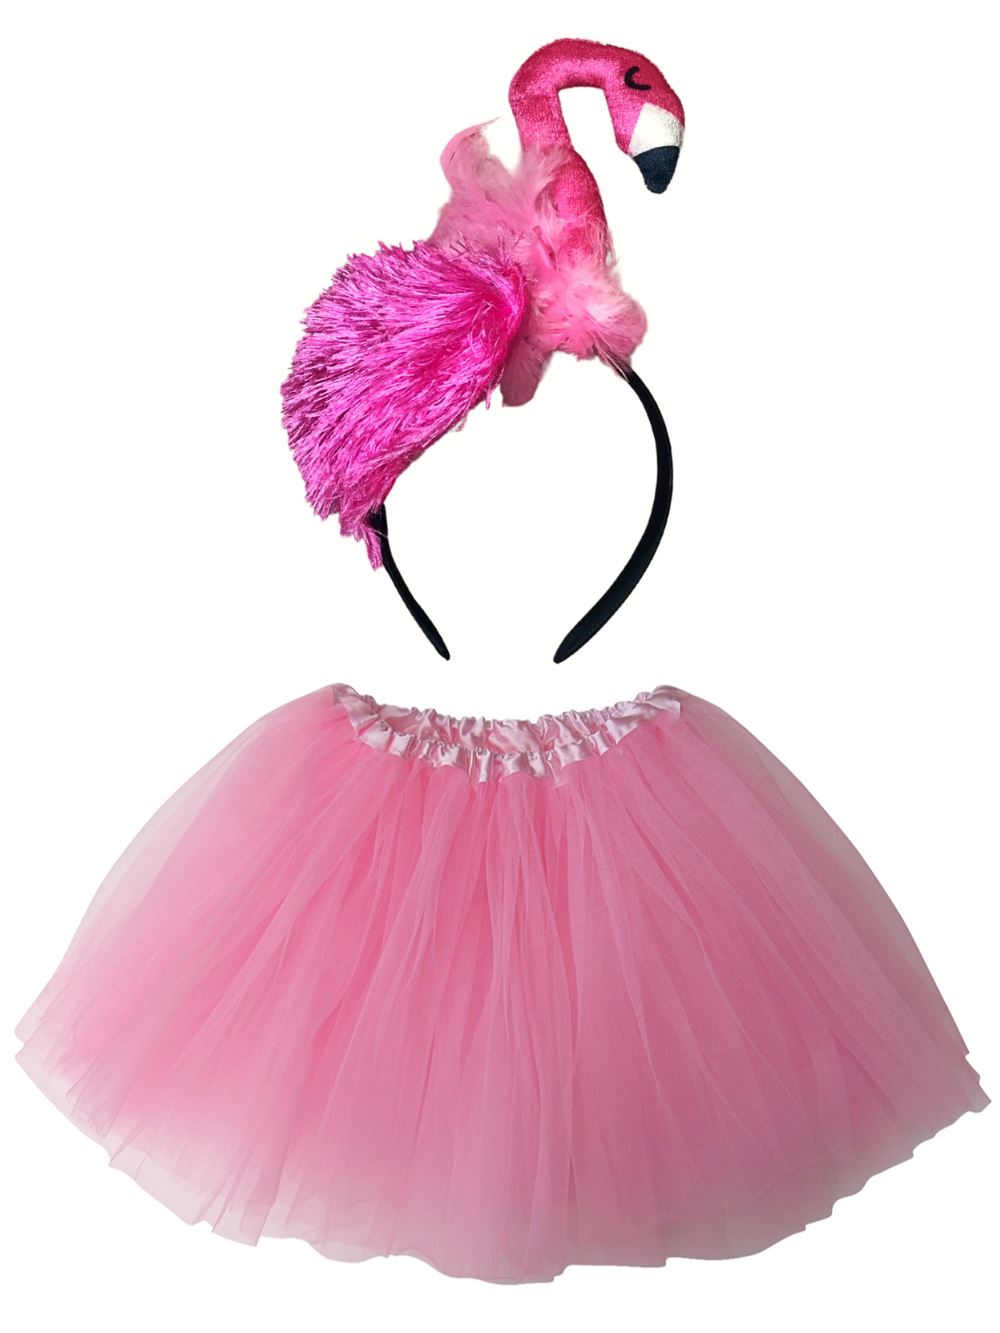 Adult Pink Flamingo Costume - Tutu Skirt & Headband Set for Adult or Plus  Size